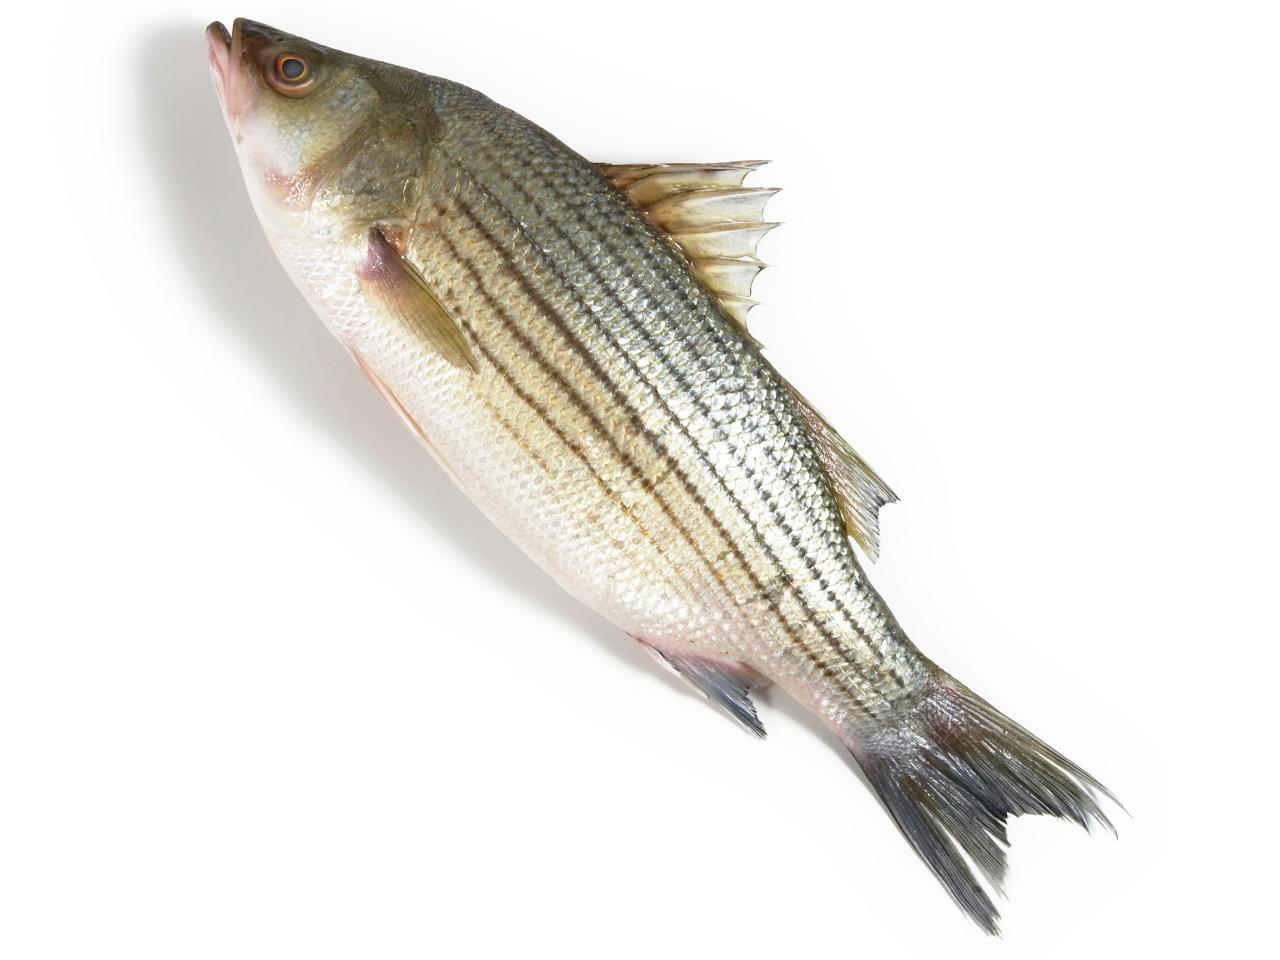 https://food.fnr.sndimg.com/content/dam/images/food/fullset/2008/6/12/0/stripedbassfish.jpg.rend.hgtvcom.1280.960.suffix/1383078084240.jpeg